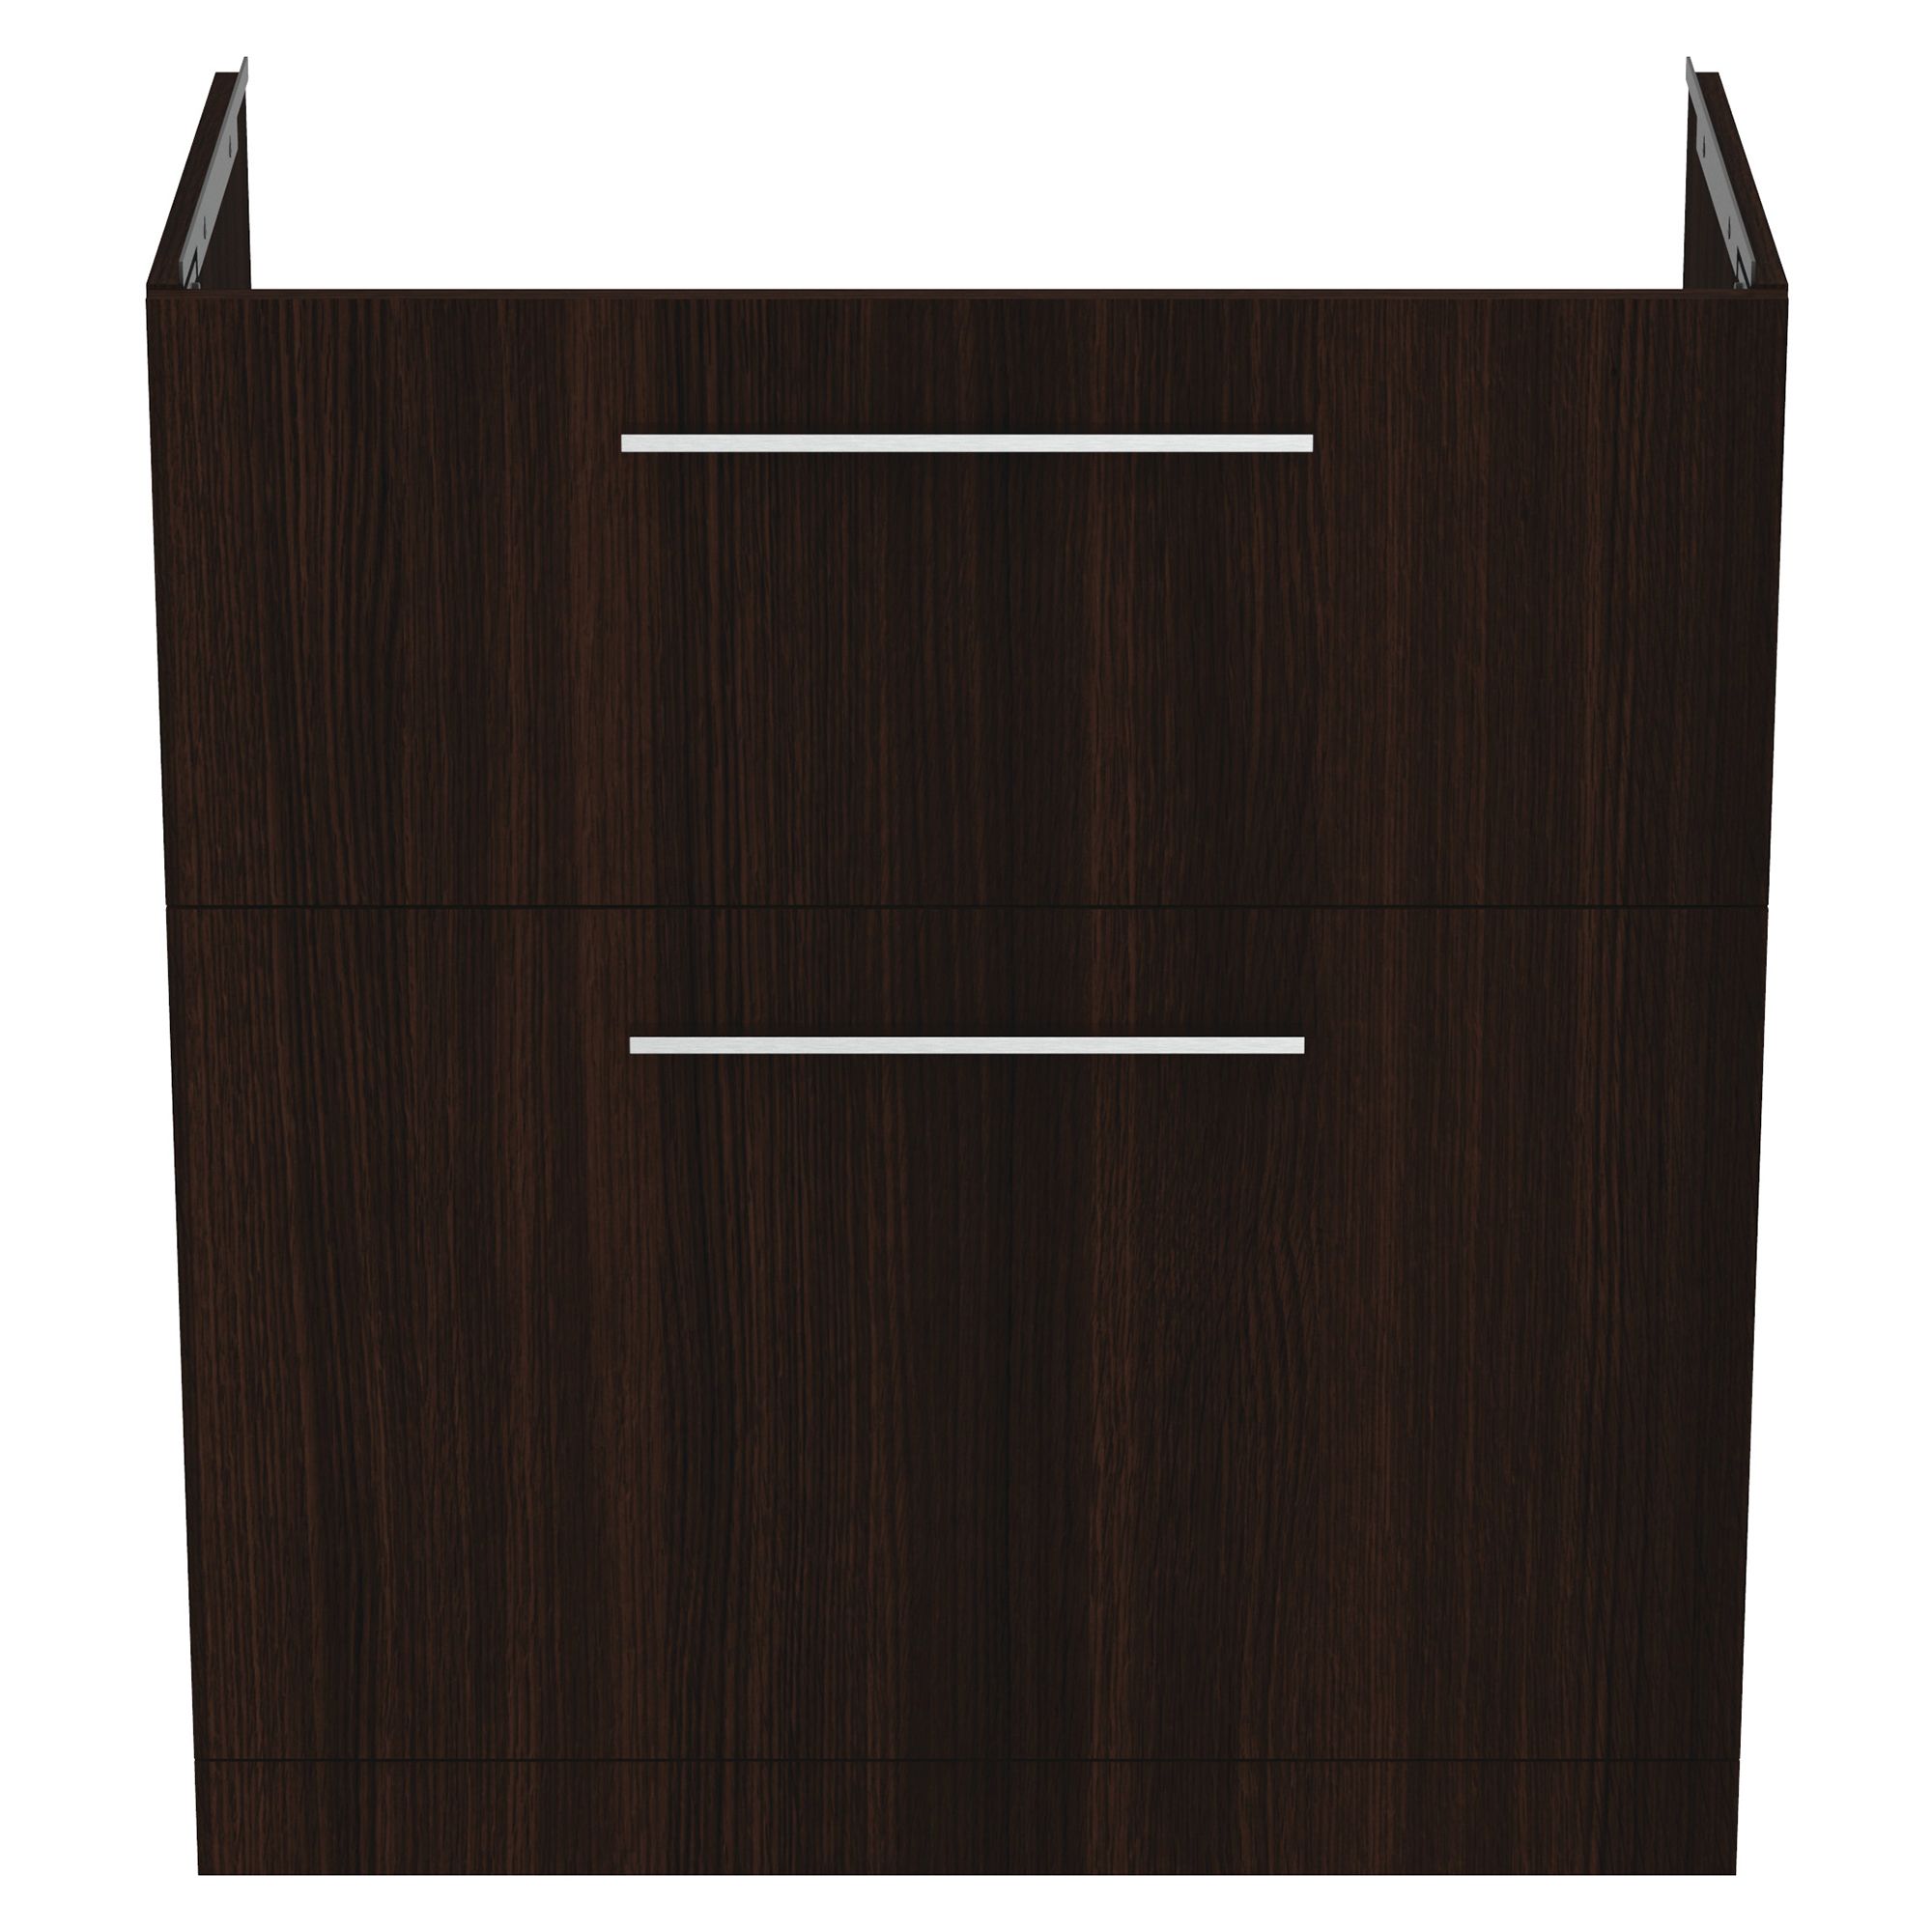 Ideal Standard i.life A Standard Coffee Brown Oak effect Freestanding Bathroom Vanity unit (H) 853mm (W) 800mm